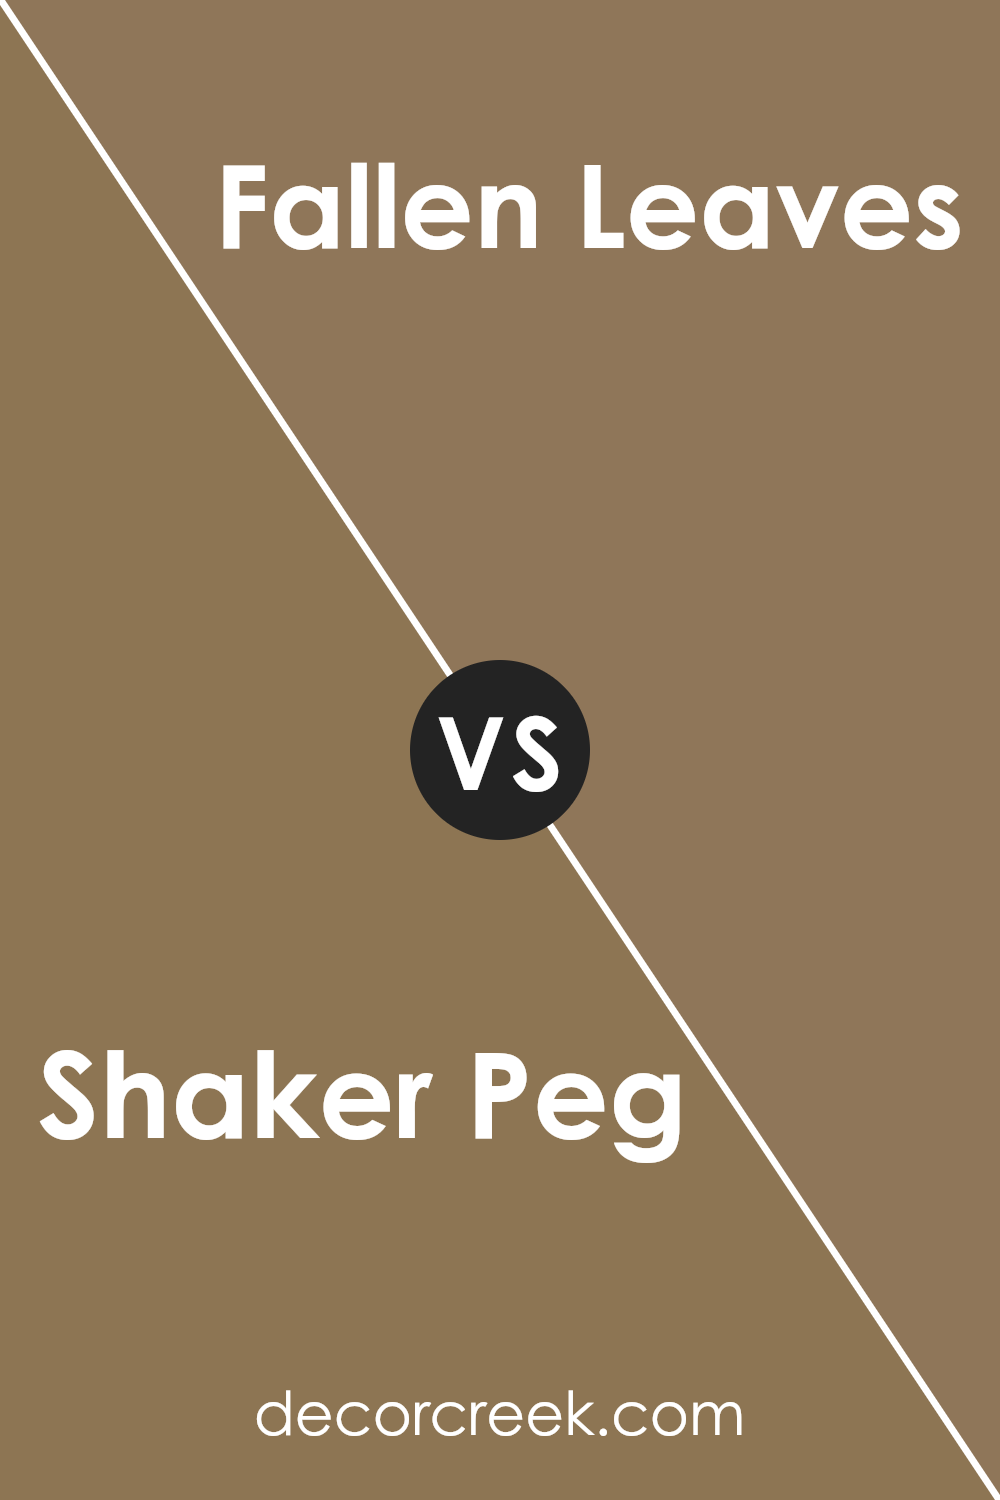 shaker_peg_sw_9539_vs_fallen_leaves_sw_9114